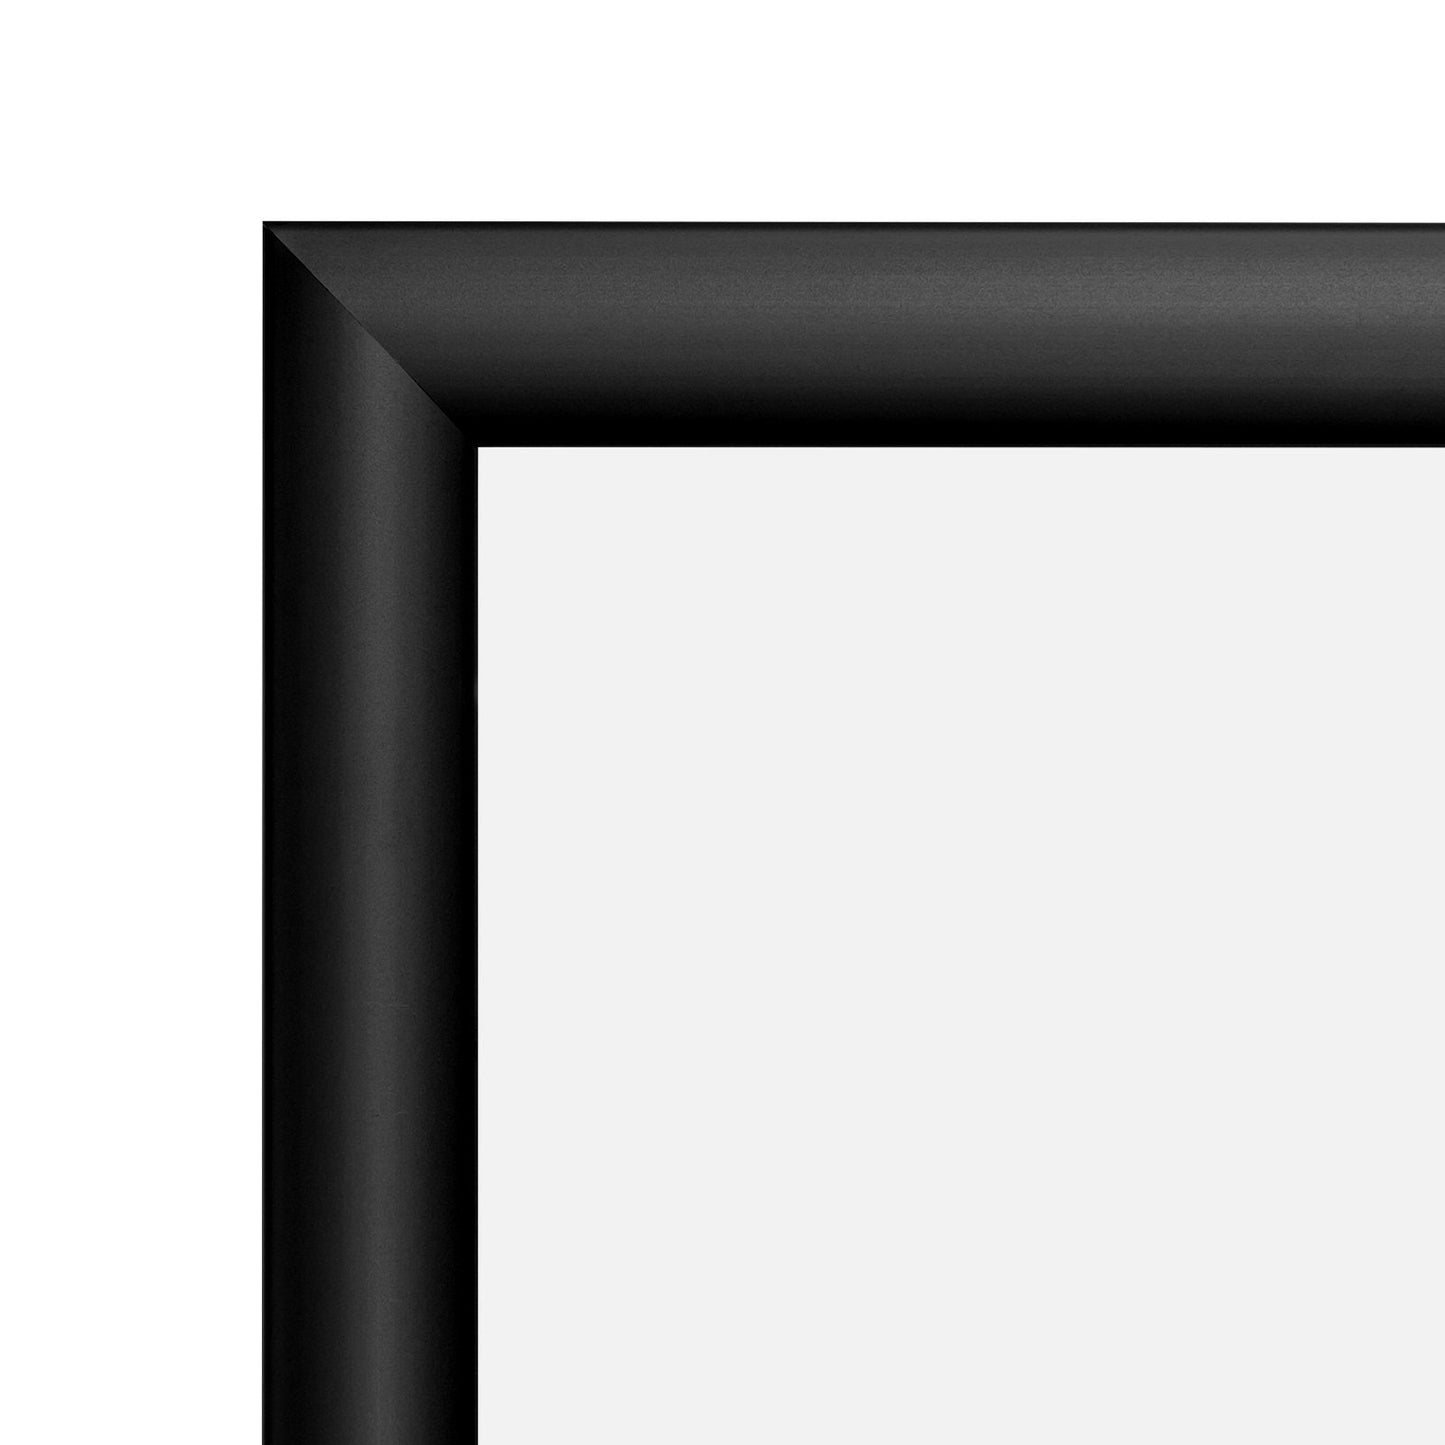 17x38 Black SnapeZo® Snap Frame - 1.2" Profile - Snap Frames Direct